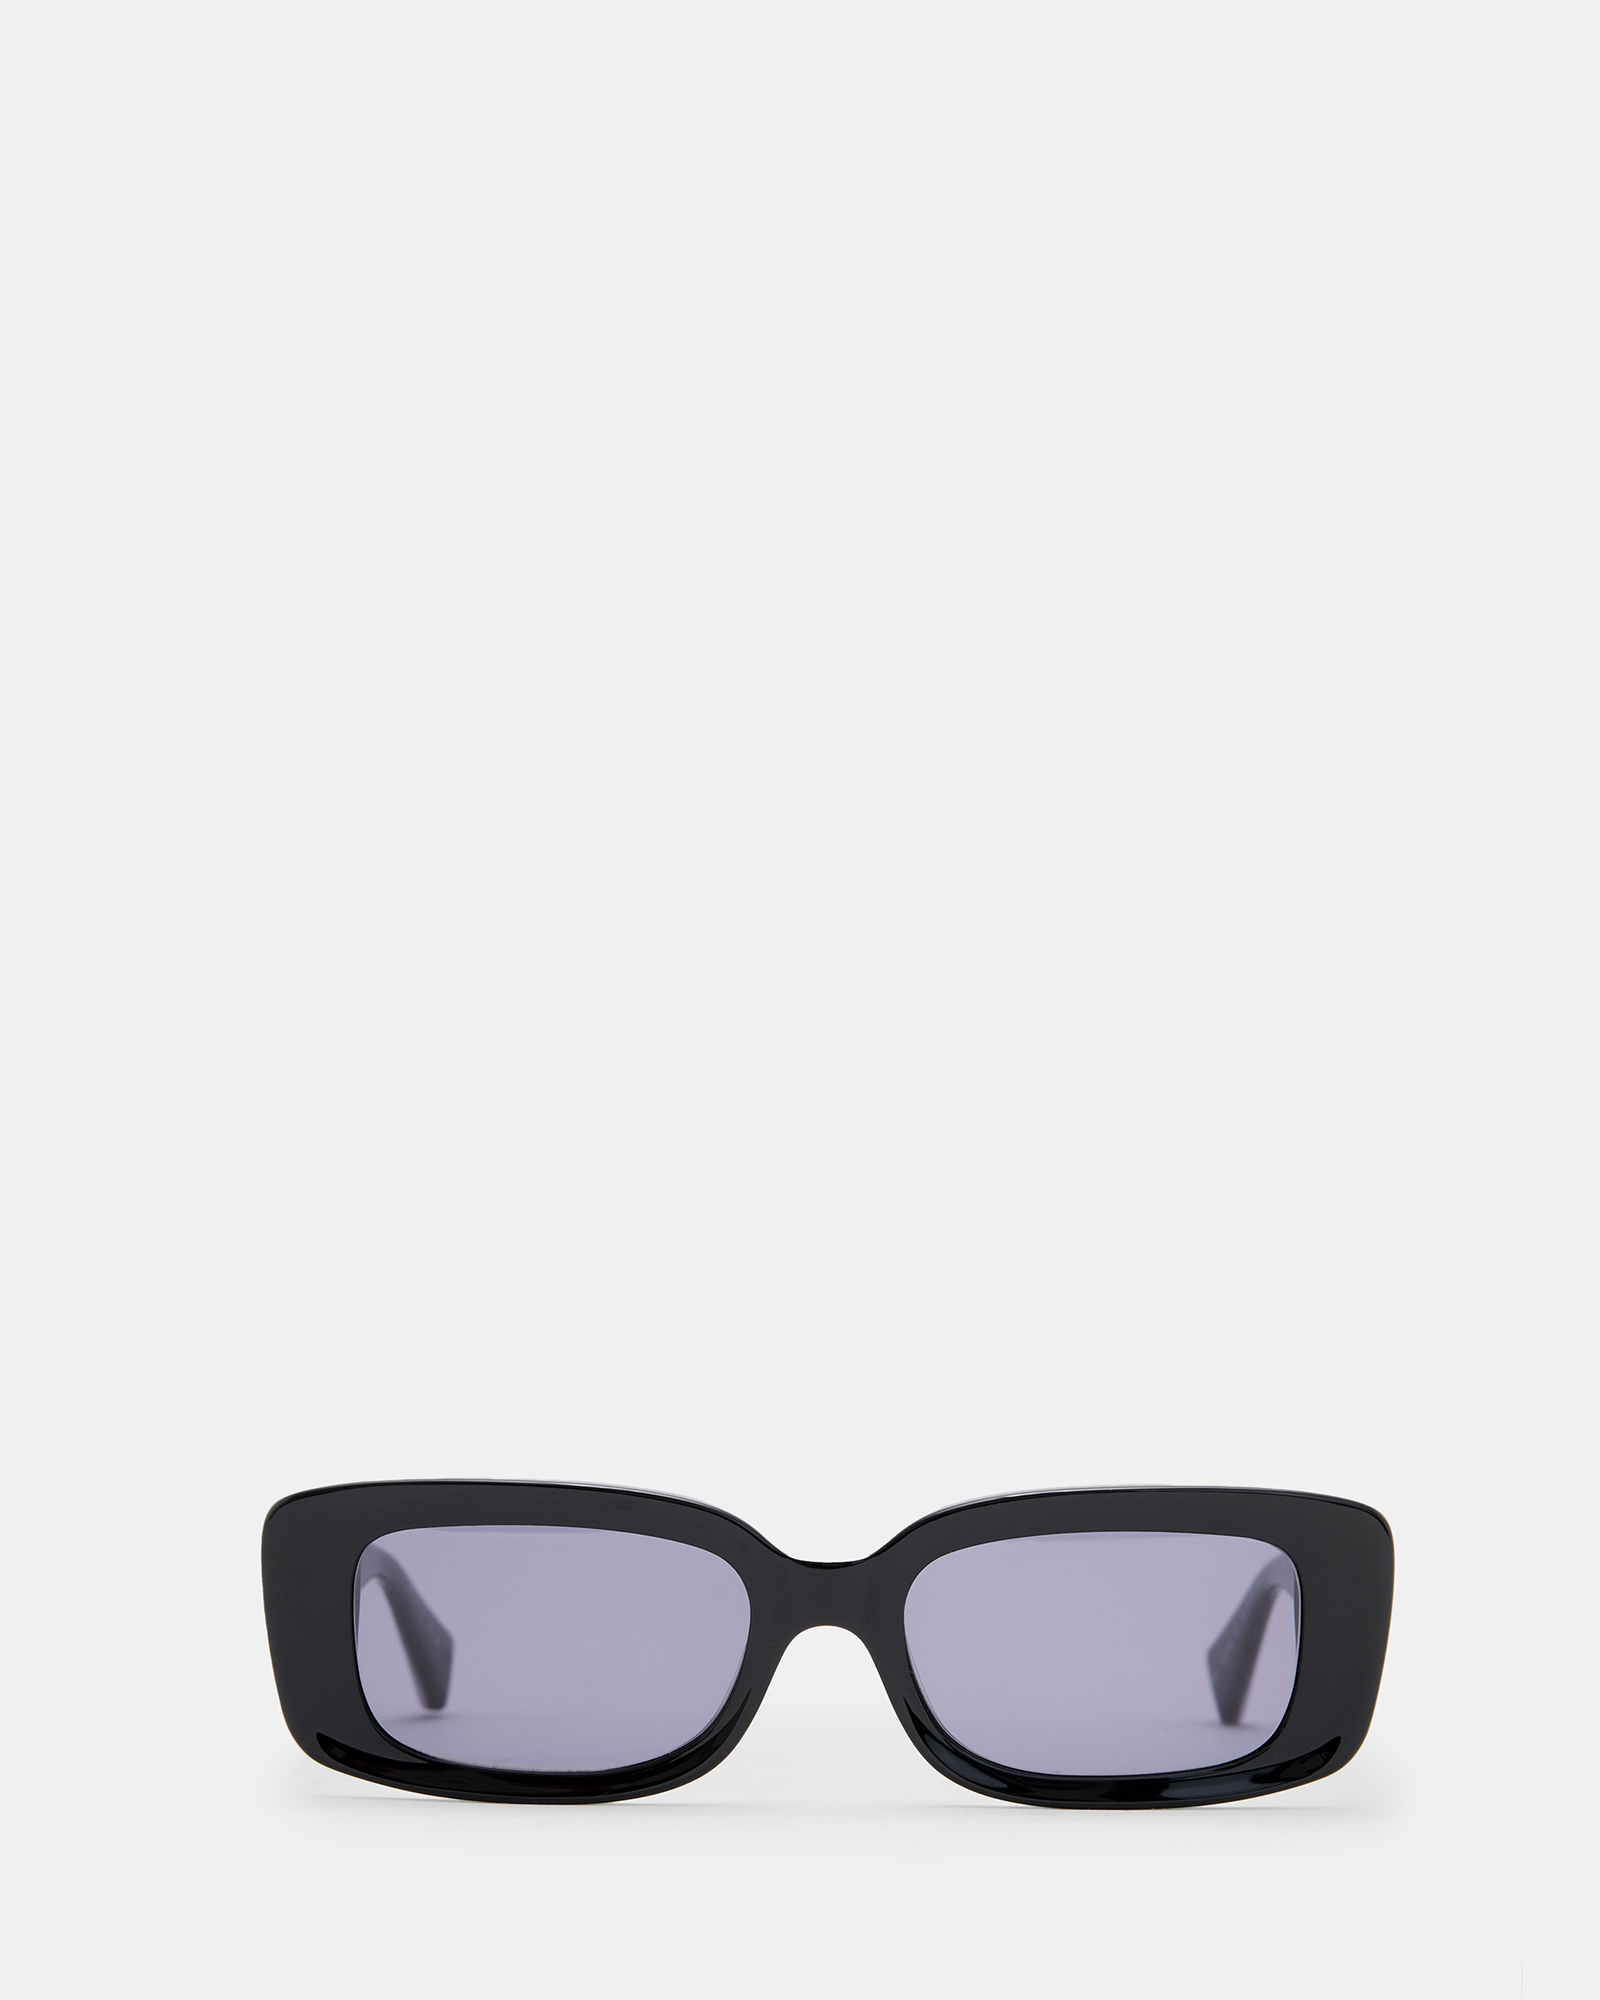 AllSaints Sonic Rectangular Sunglasses,, Black